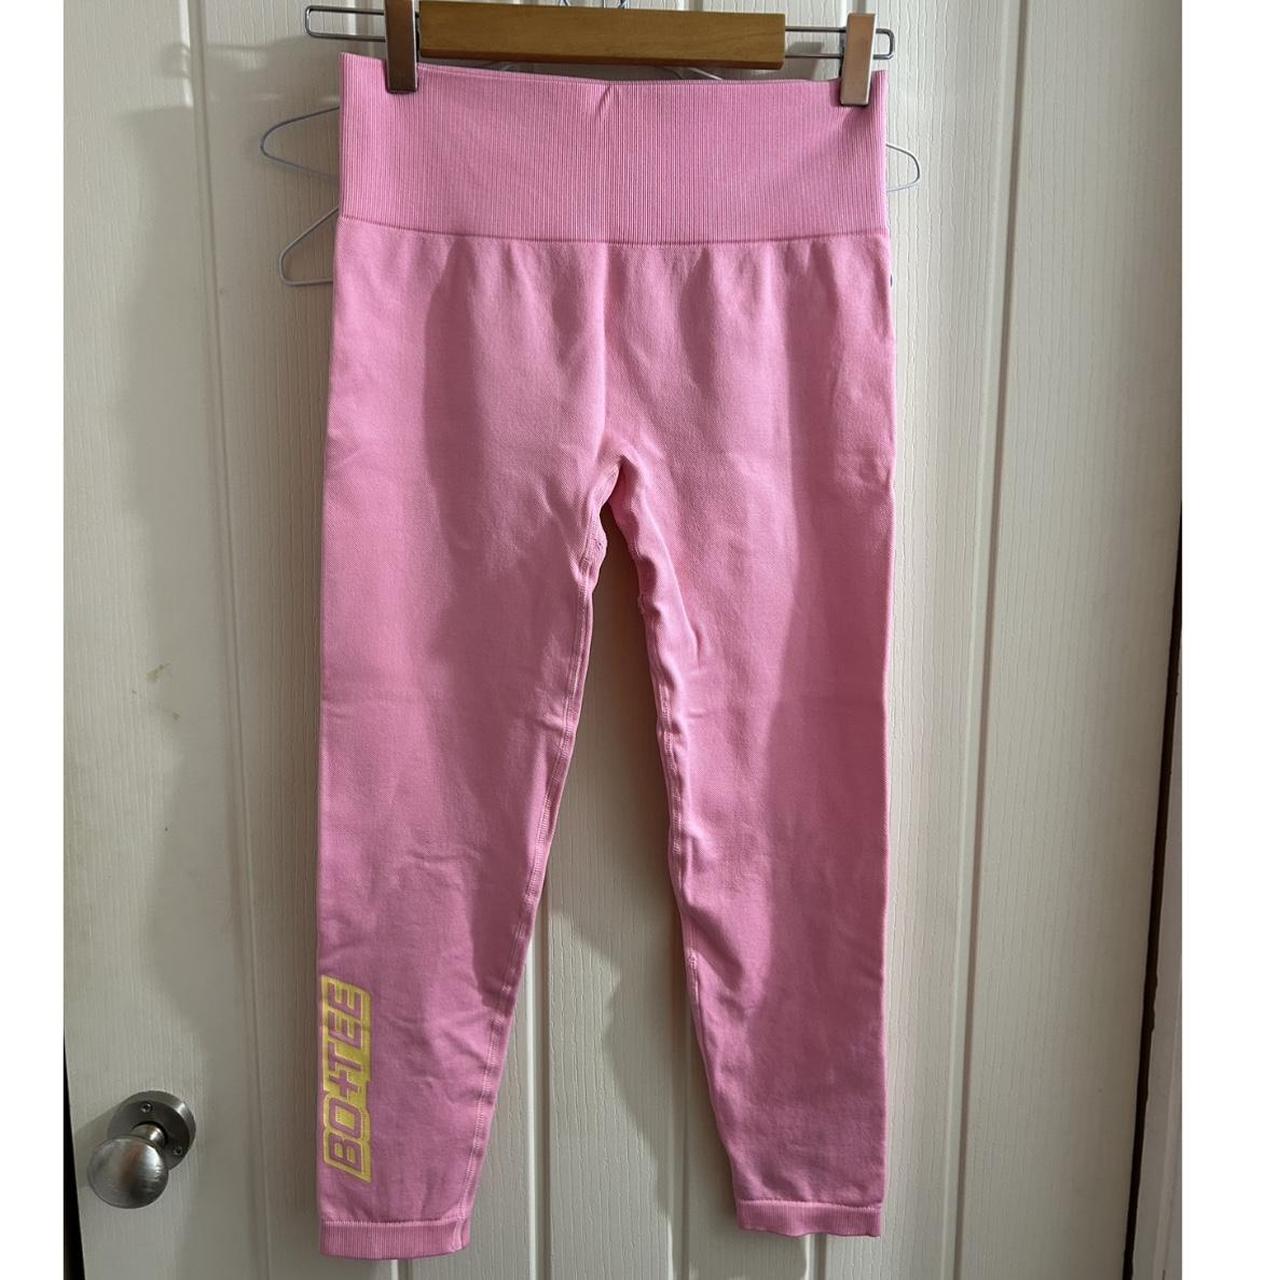 Pink Bo+Tee leggings, never worn before as too small